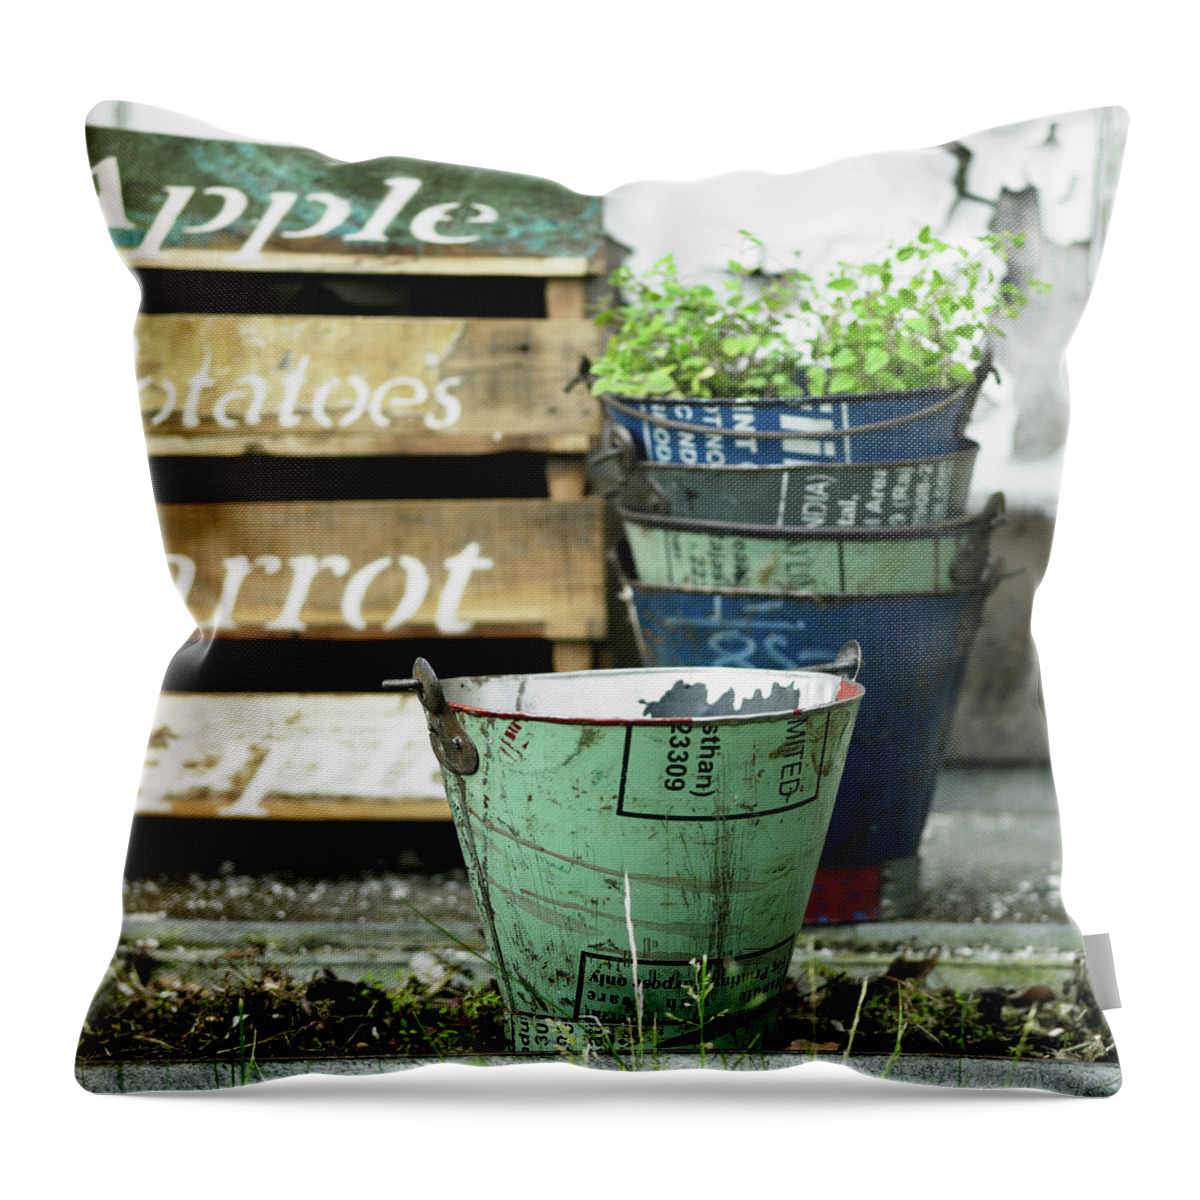 Copenhagen Throw Pillow featuring the photograph Decorative Pails In Garden by Lisbeth Hjort